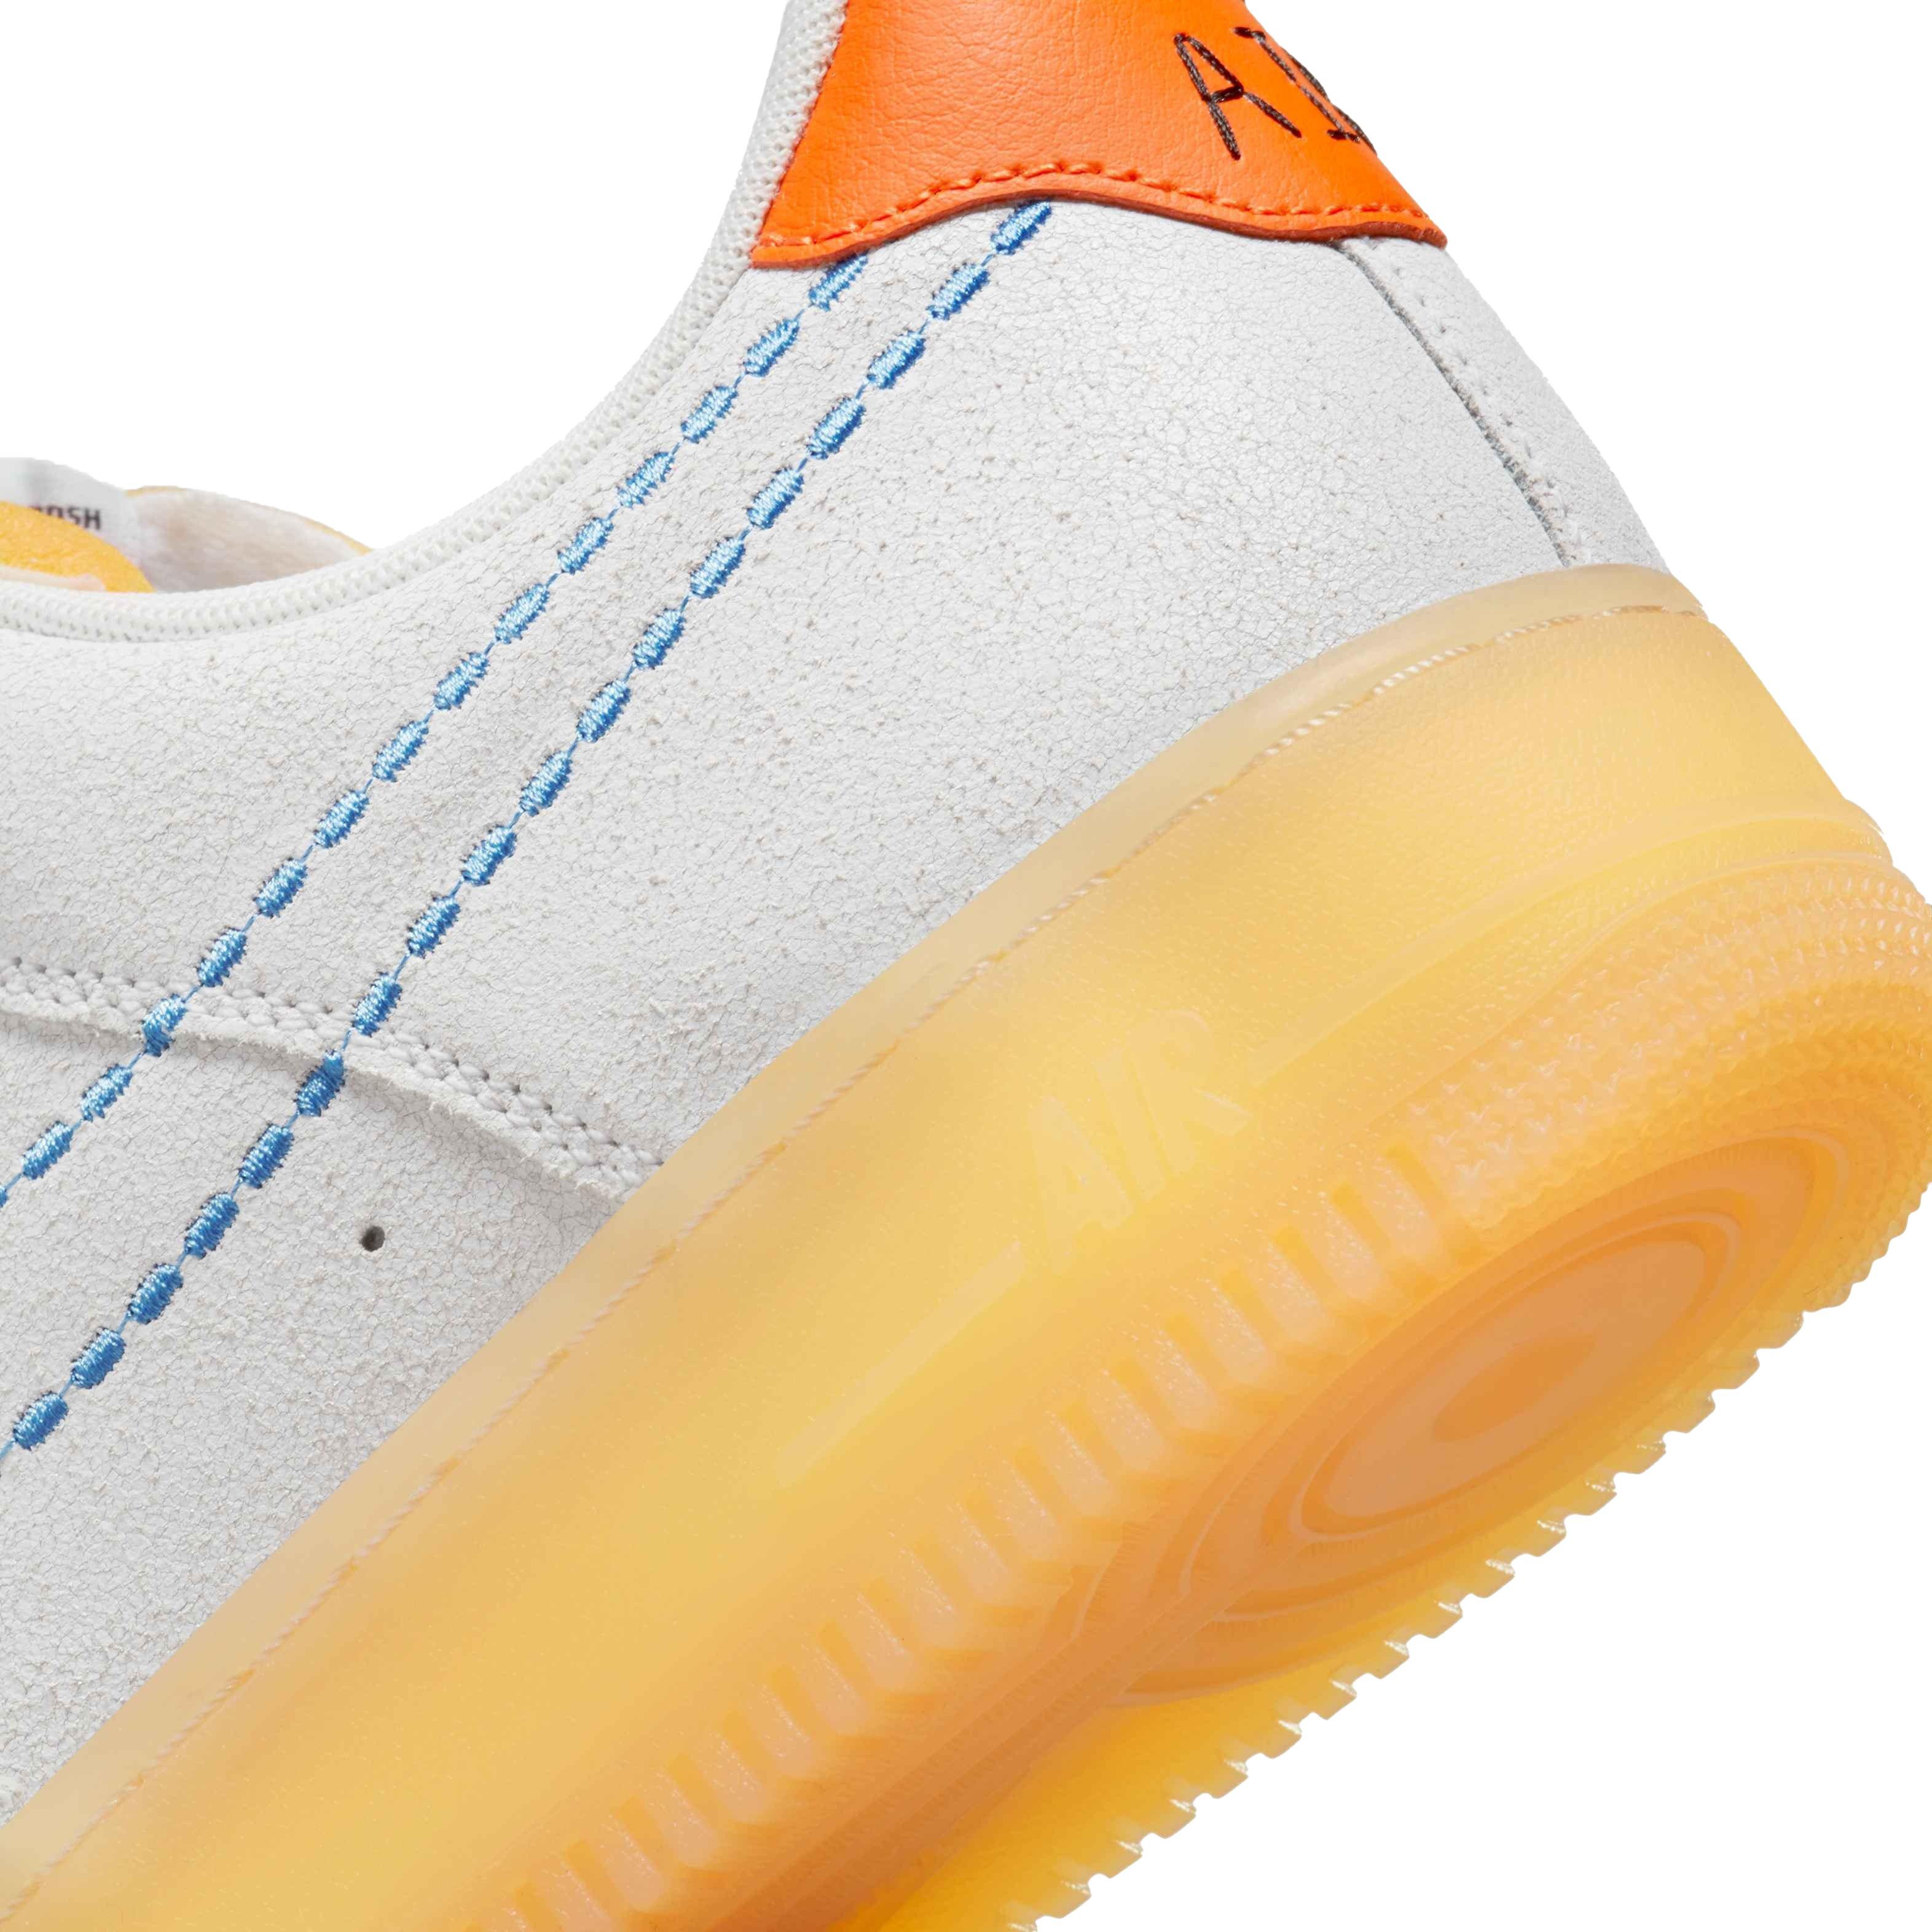 2020 Nike Air Force (1)’07 LV8 Orange/Blue CW7300-800)Sneakers Sz M/10.5